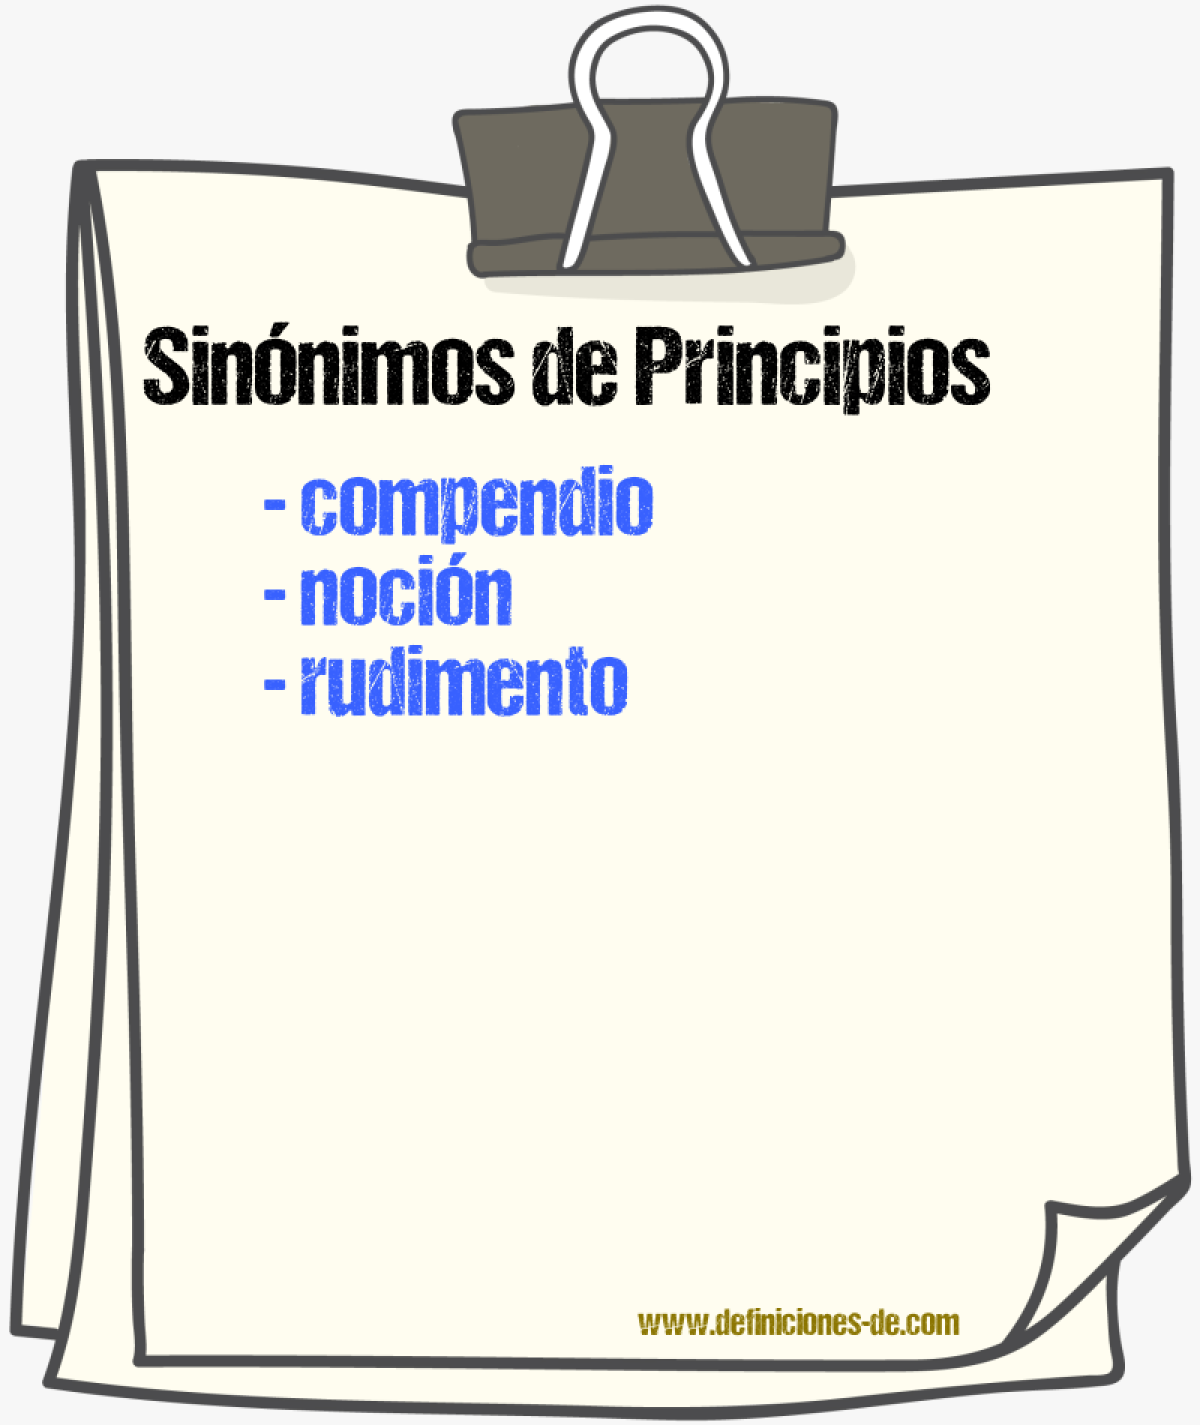 Sinónimos de principios